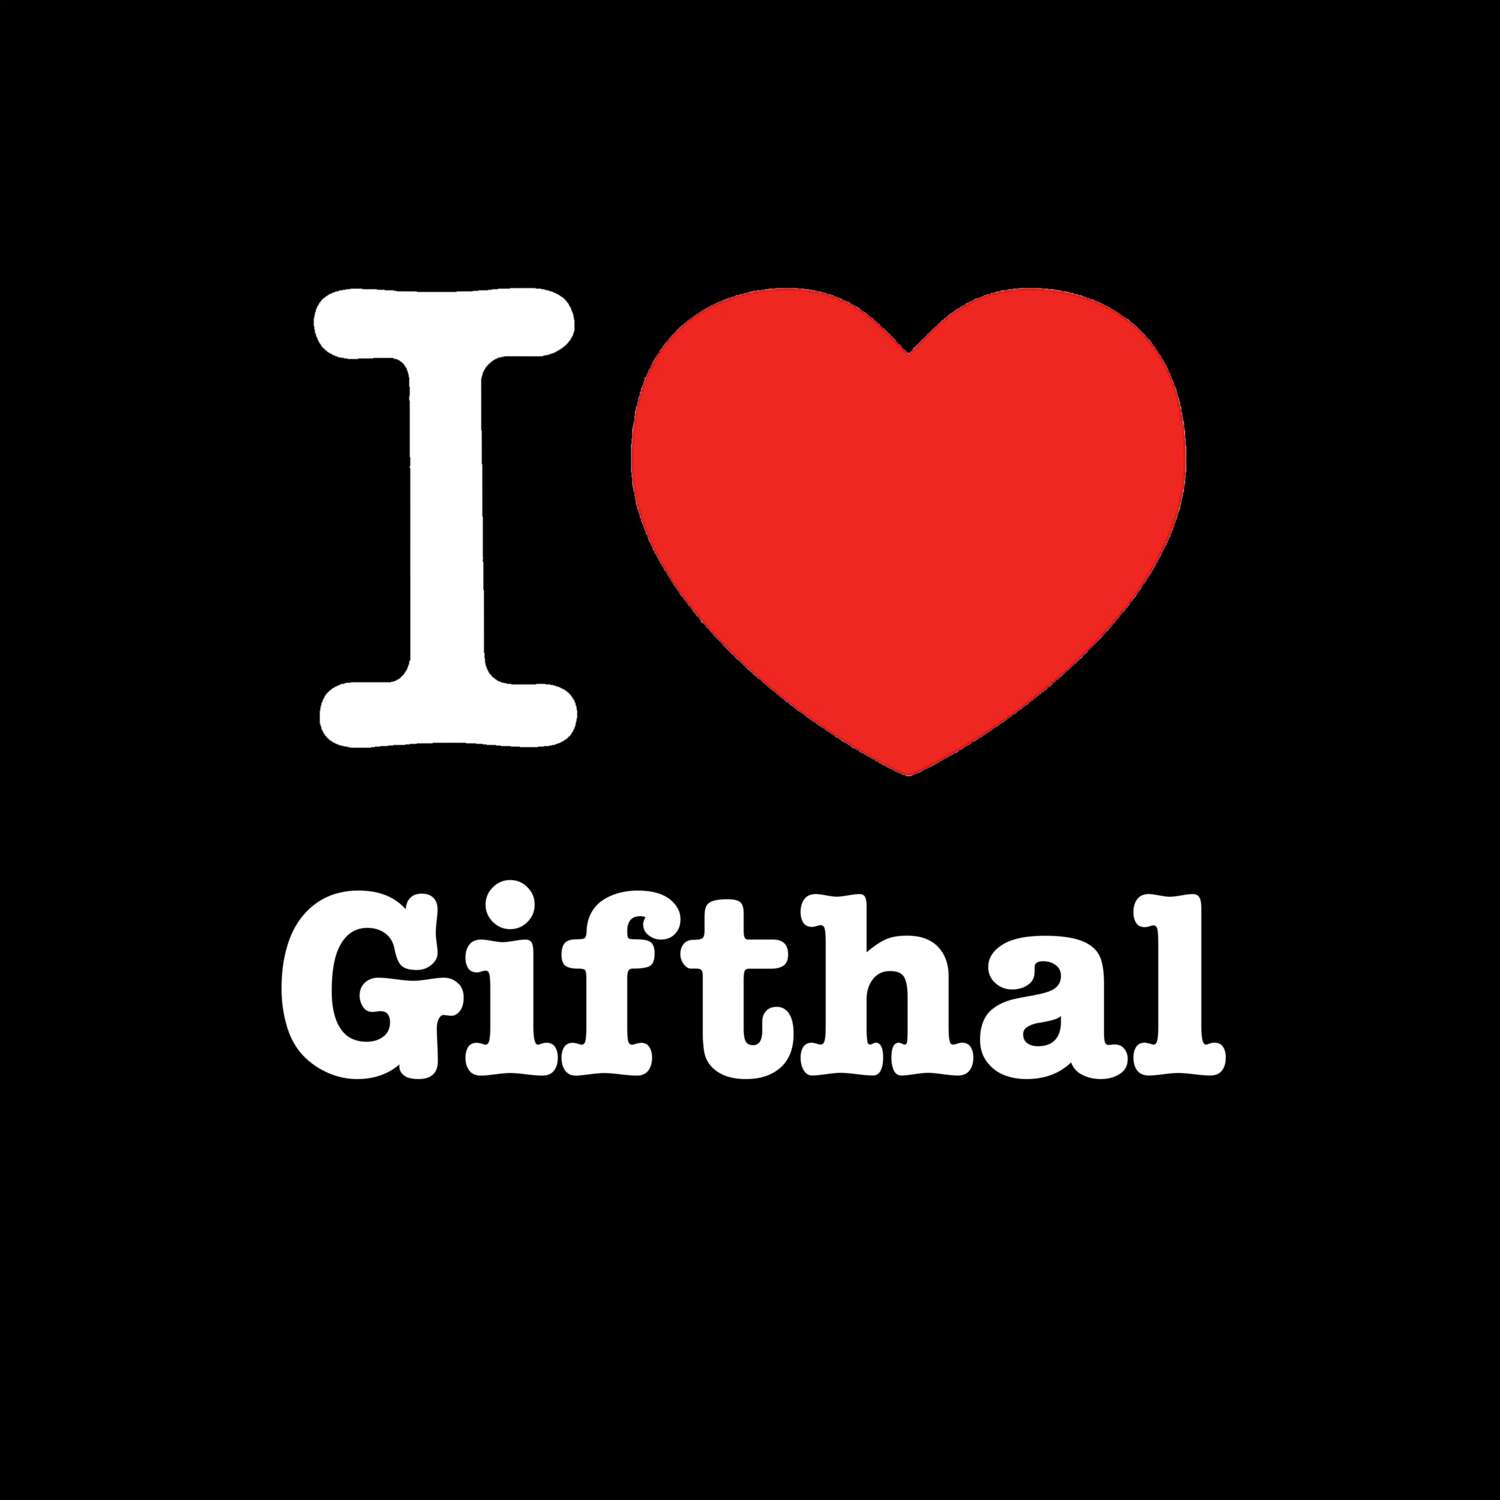 Gifthal T-Shirt »I love«